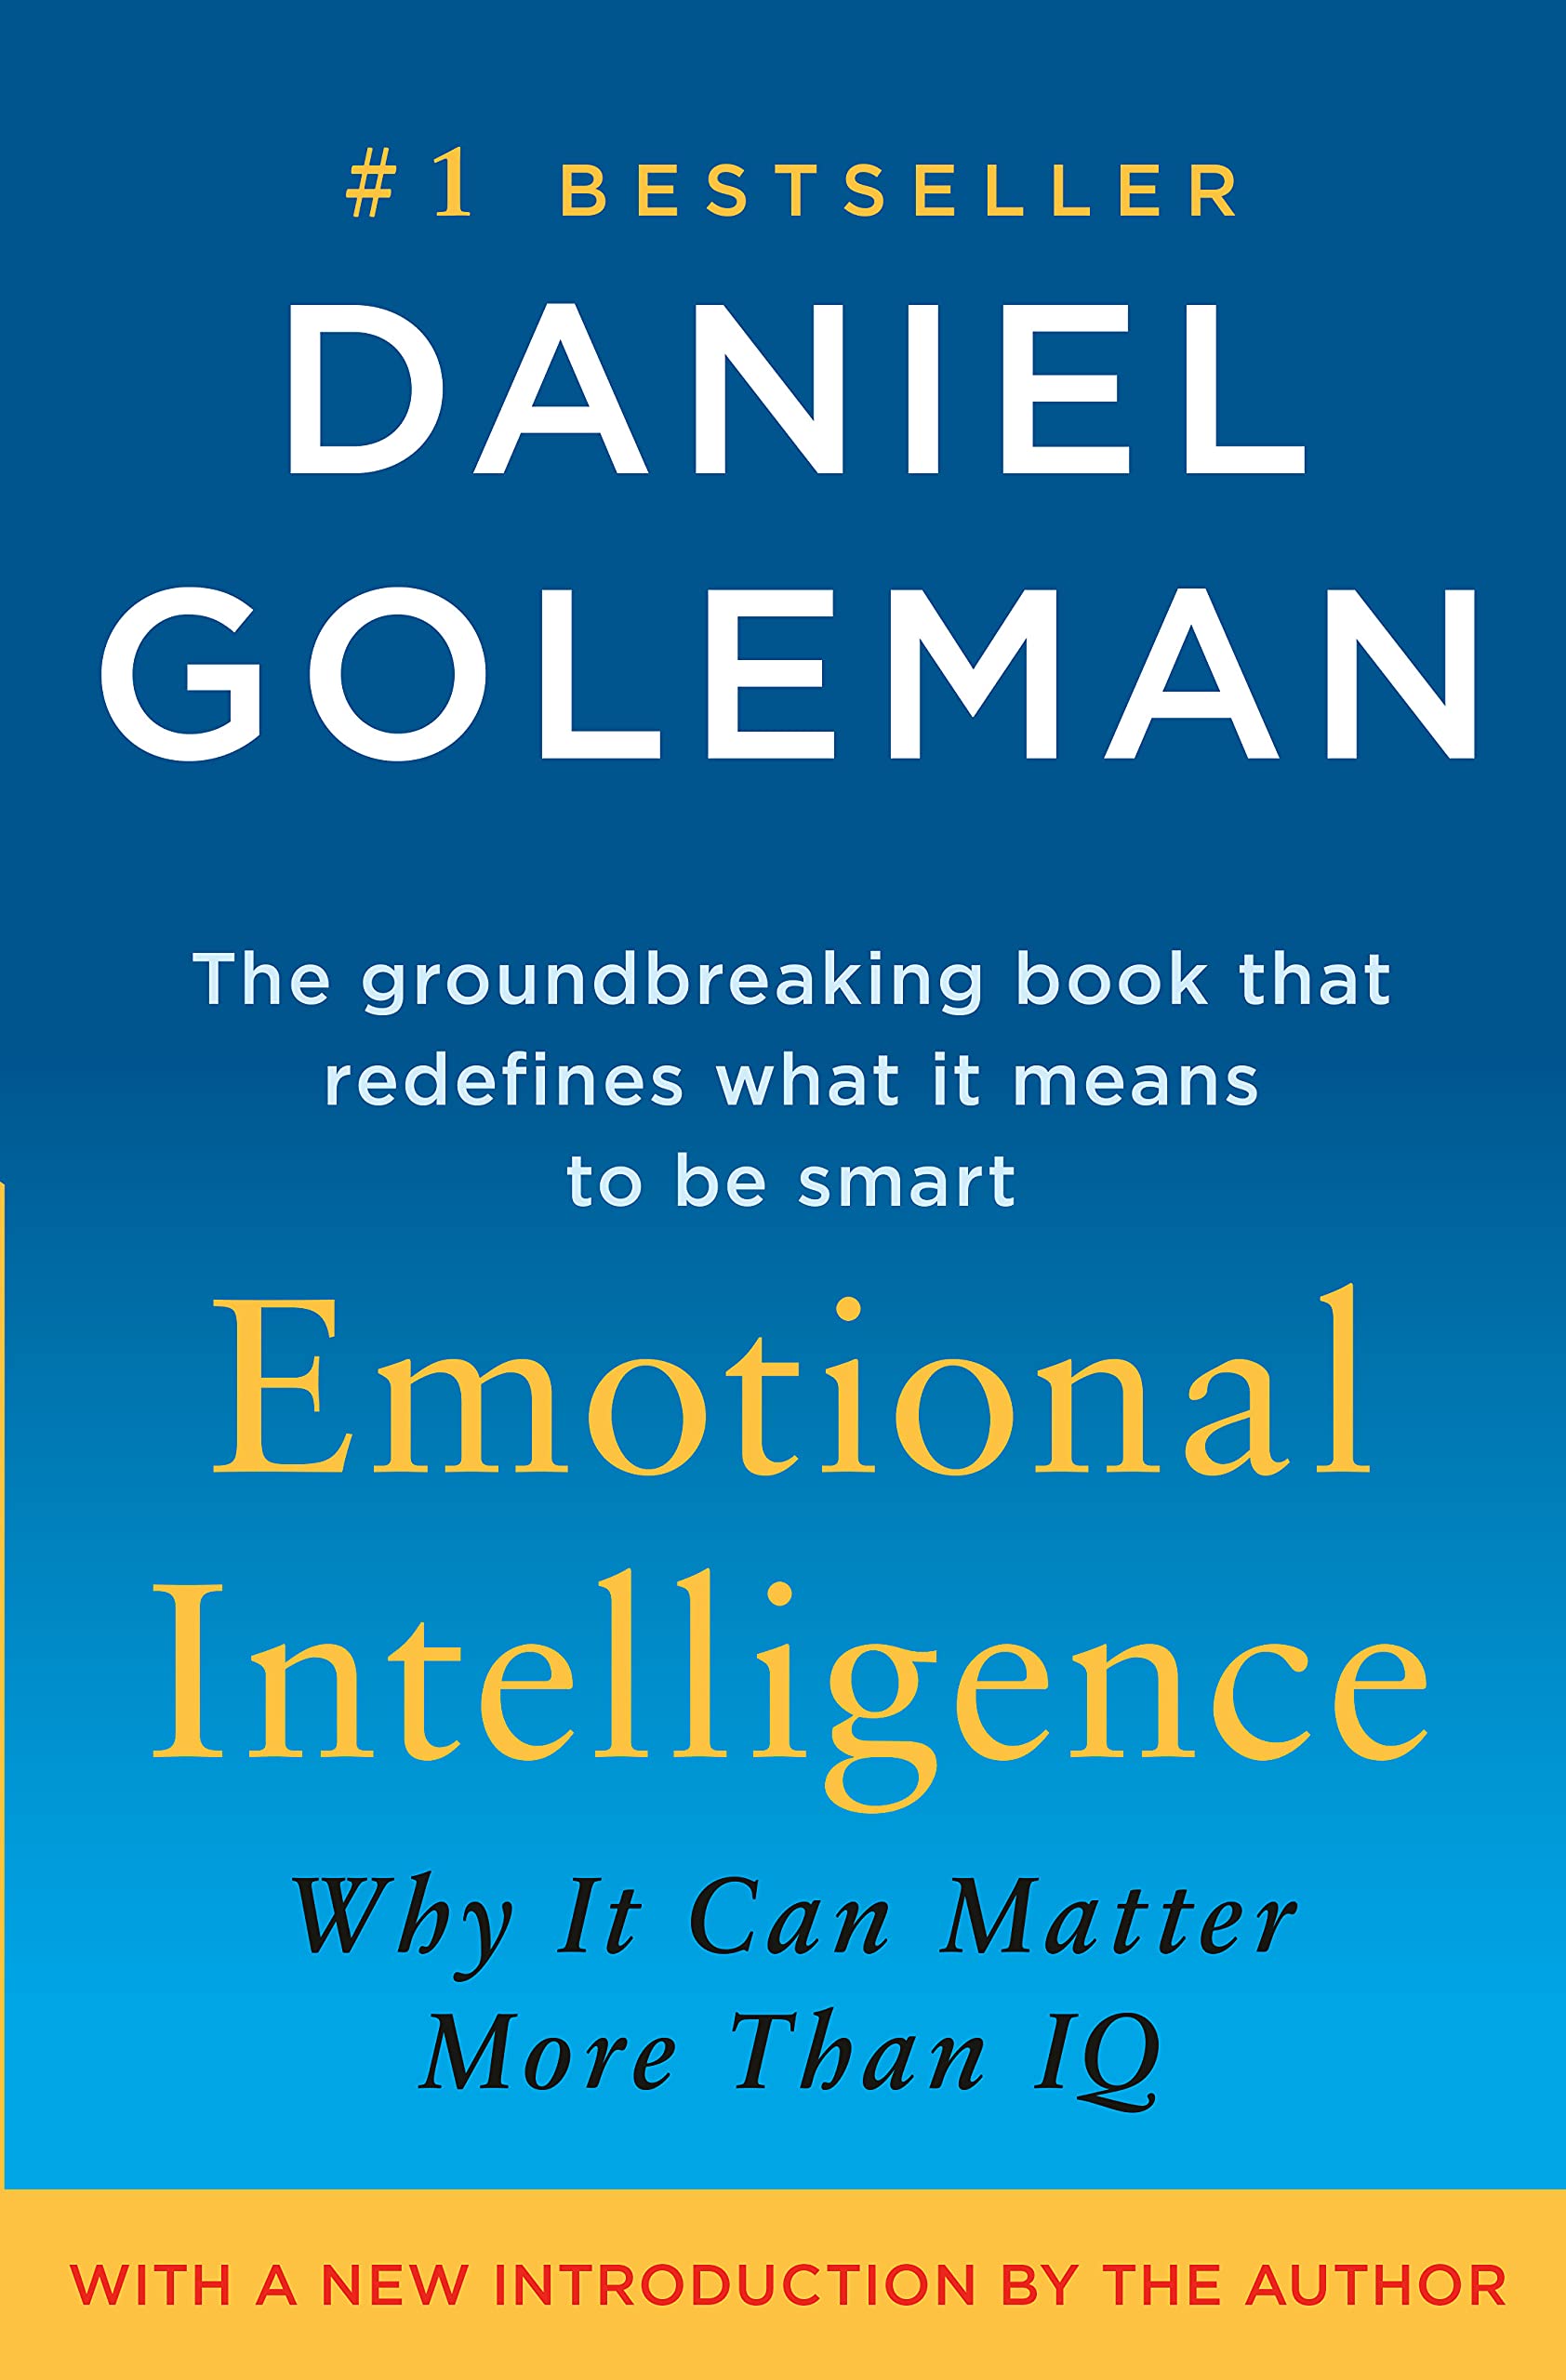 Book "Emotional Intelligence" 